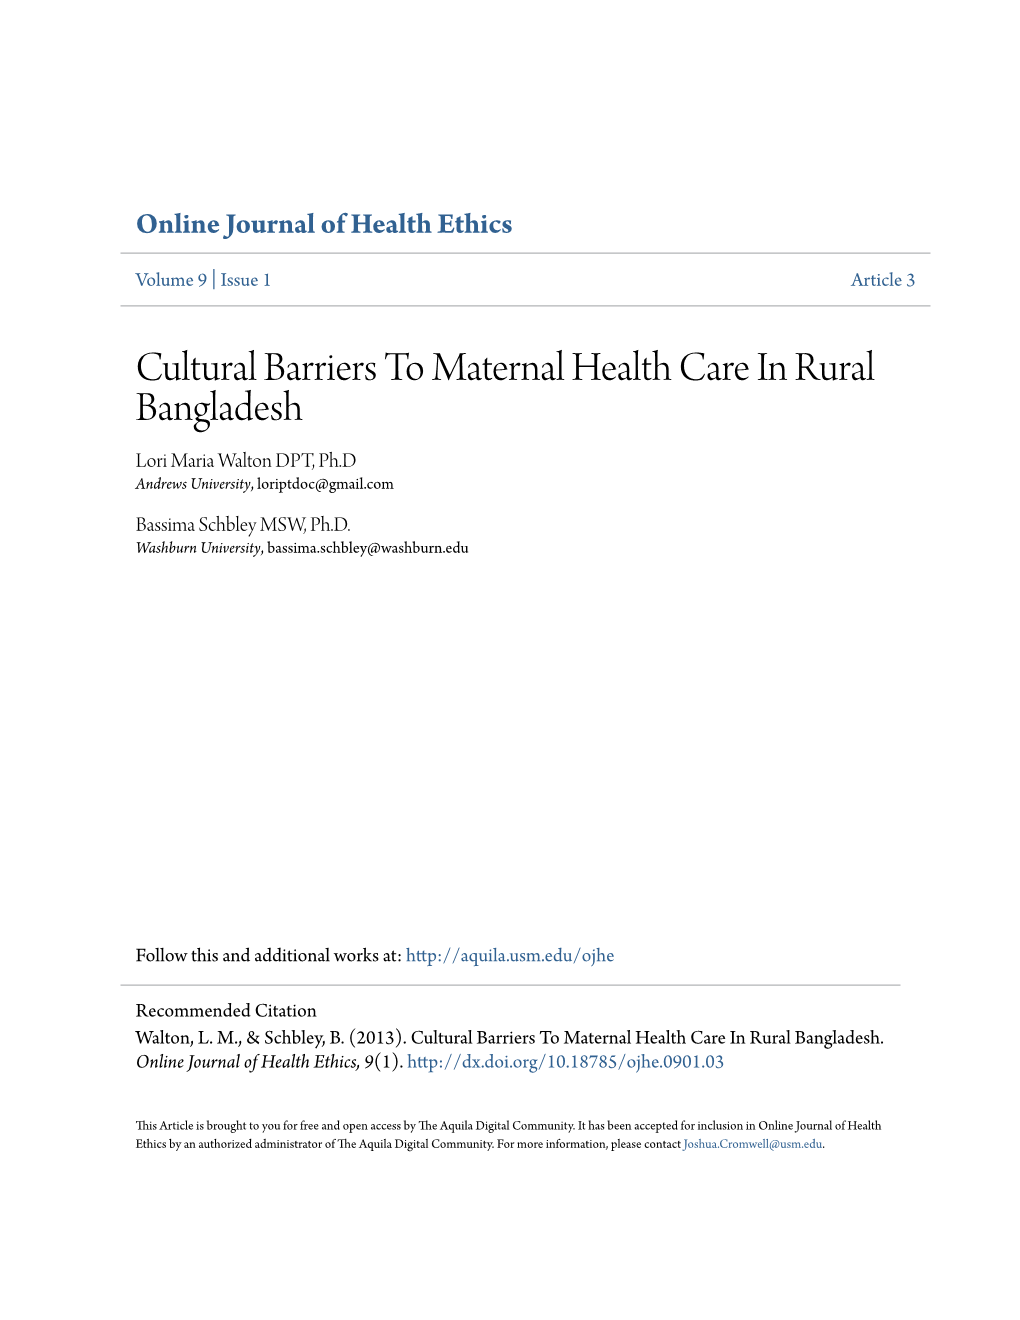 Cultural Barriers to Maternal Health Care in Rural Bangladesh Lori Maria Walton DPT, Ph.D Andrews University, Loriptdoc@Gmail.Com